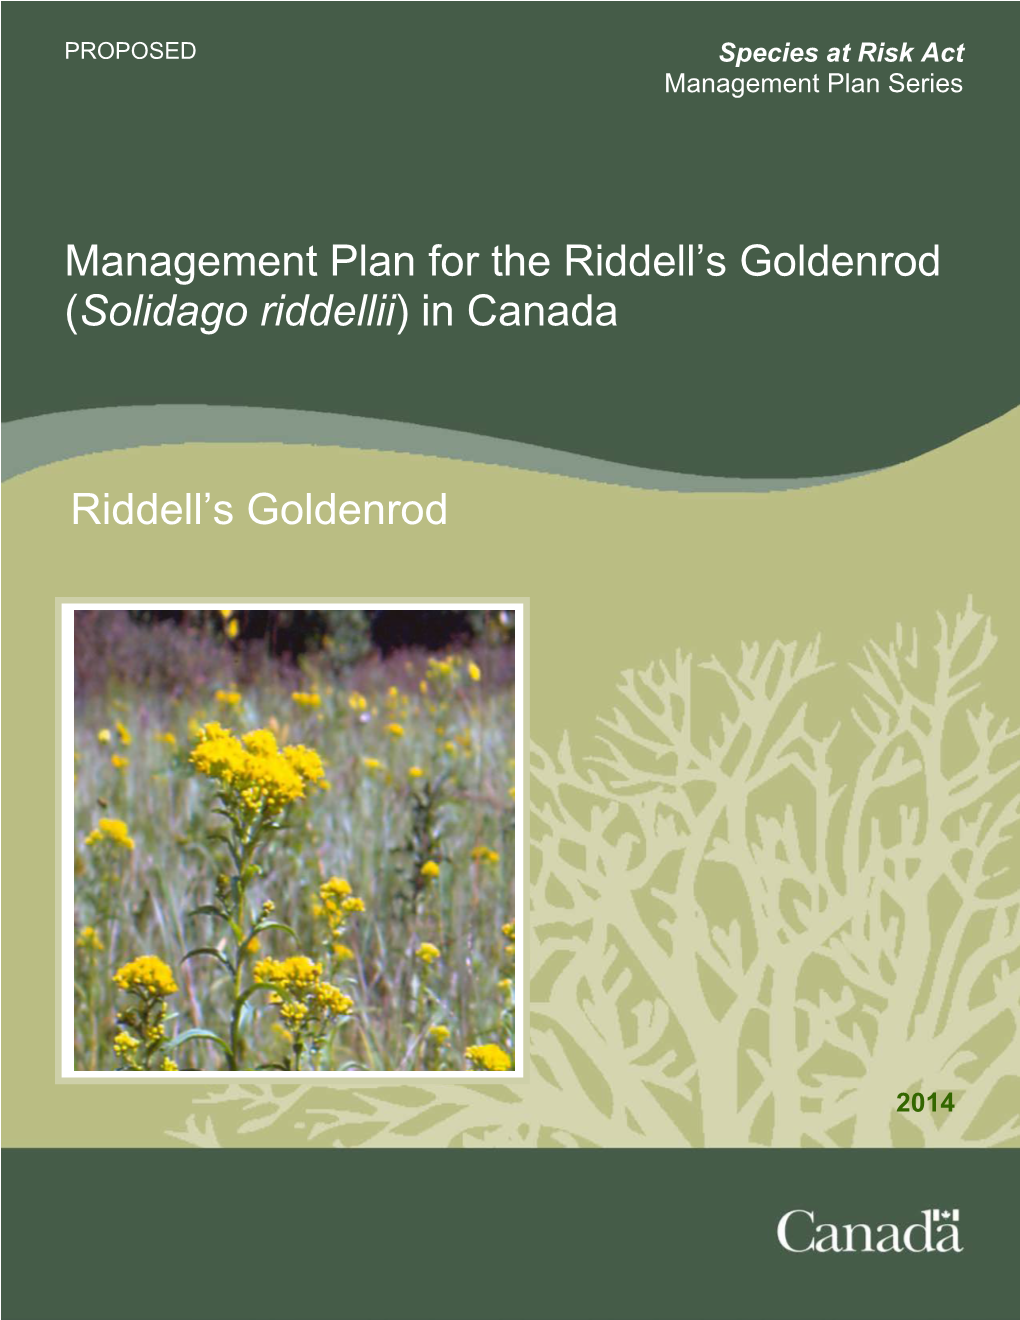 Riddell's Goldenrod (Solidago Riddellii)